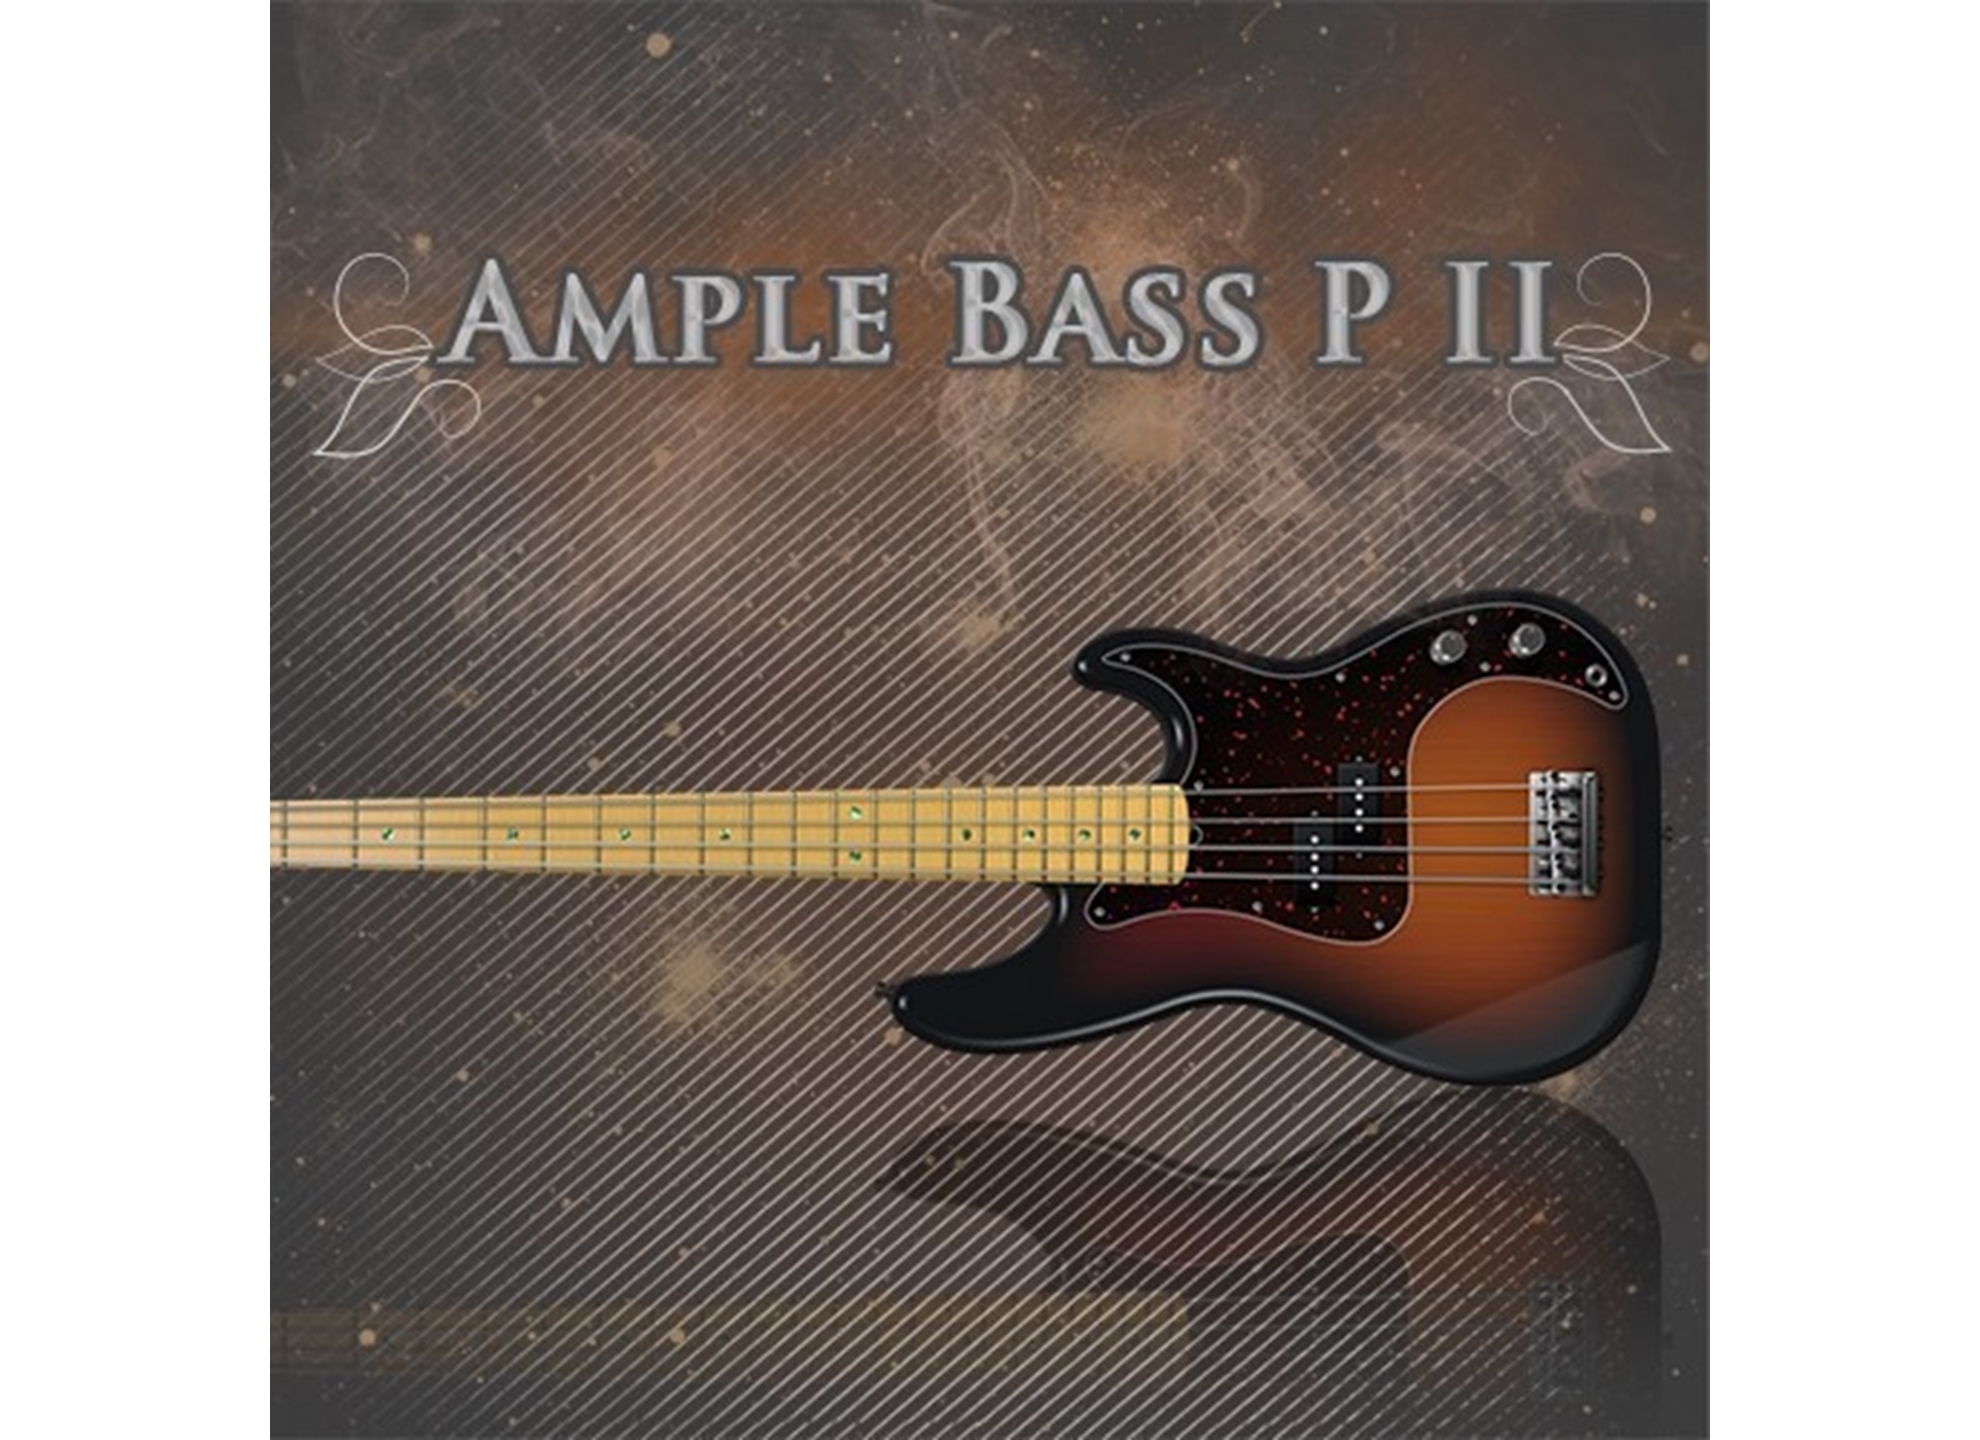 Ample Bass P III